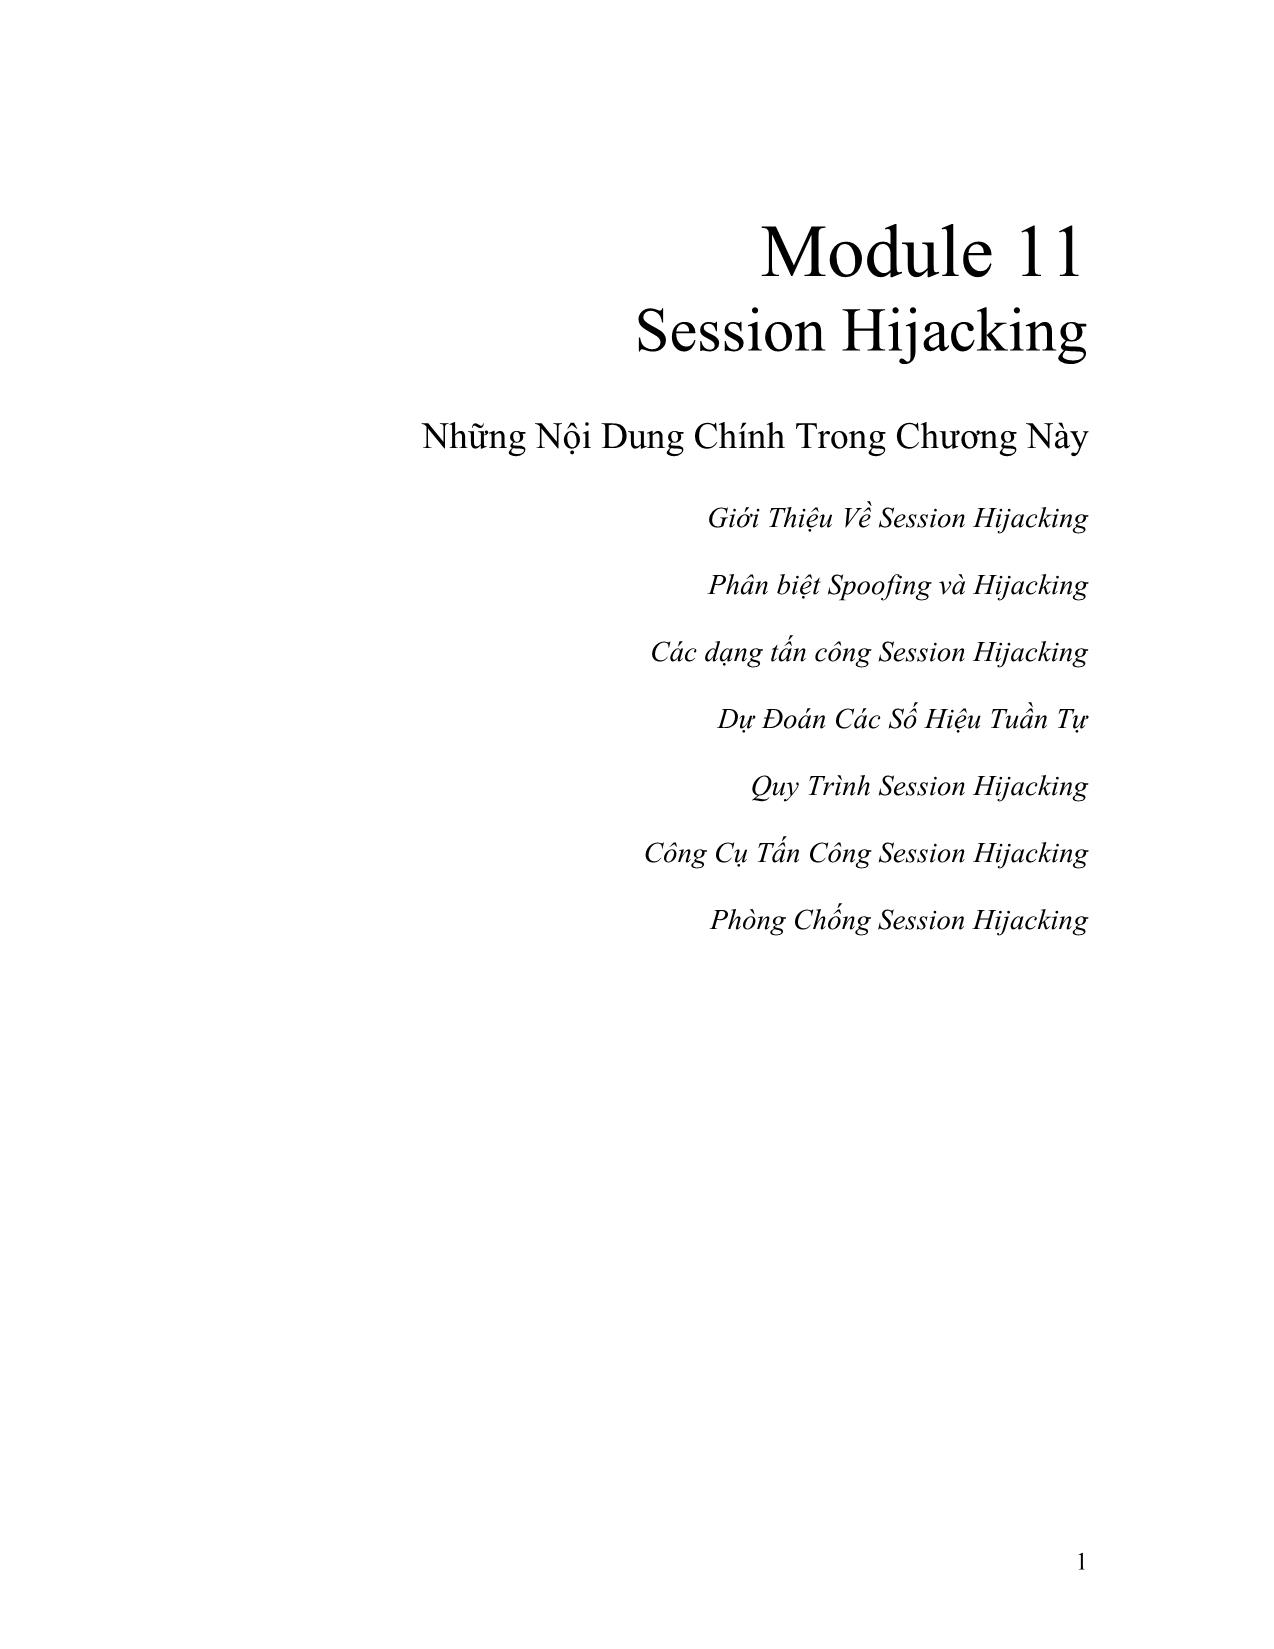 Module 11: Session Hijacking trang 1